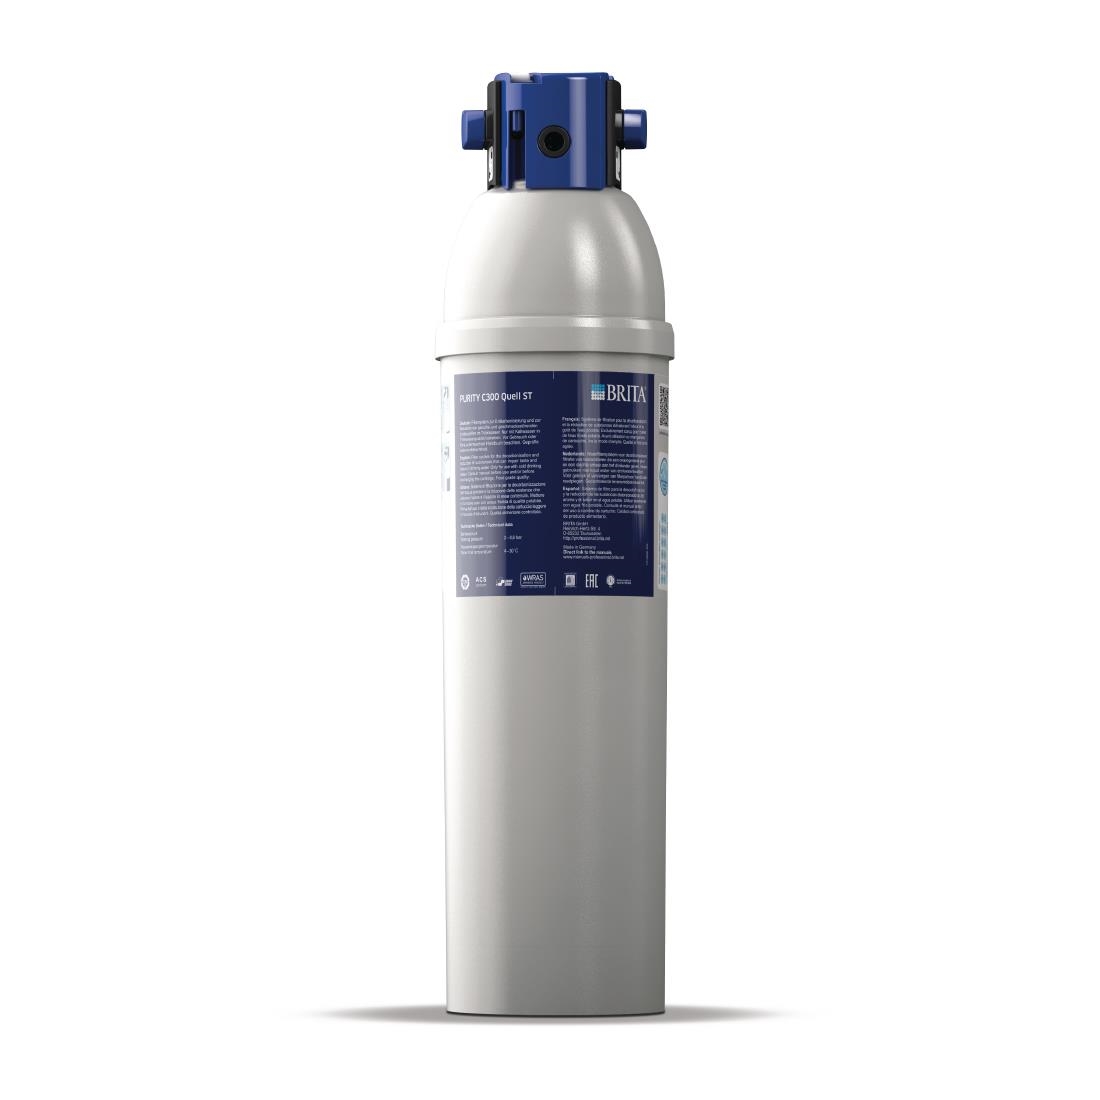 Brita Purity C 300 Water Filter System